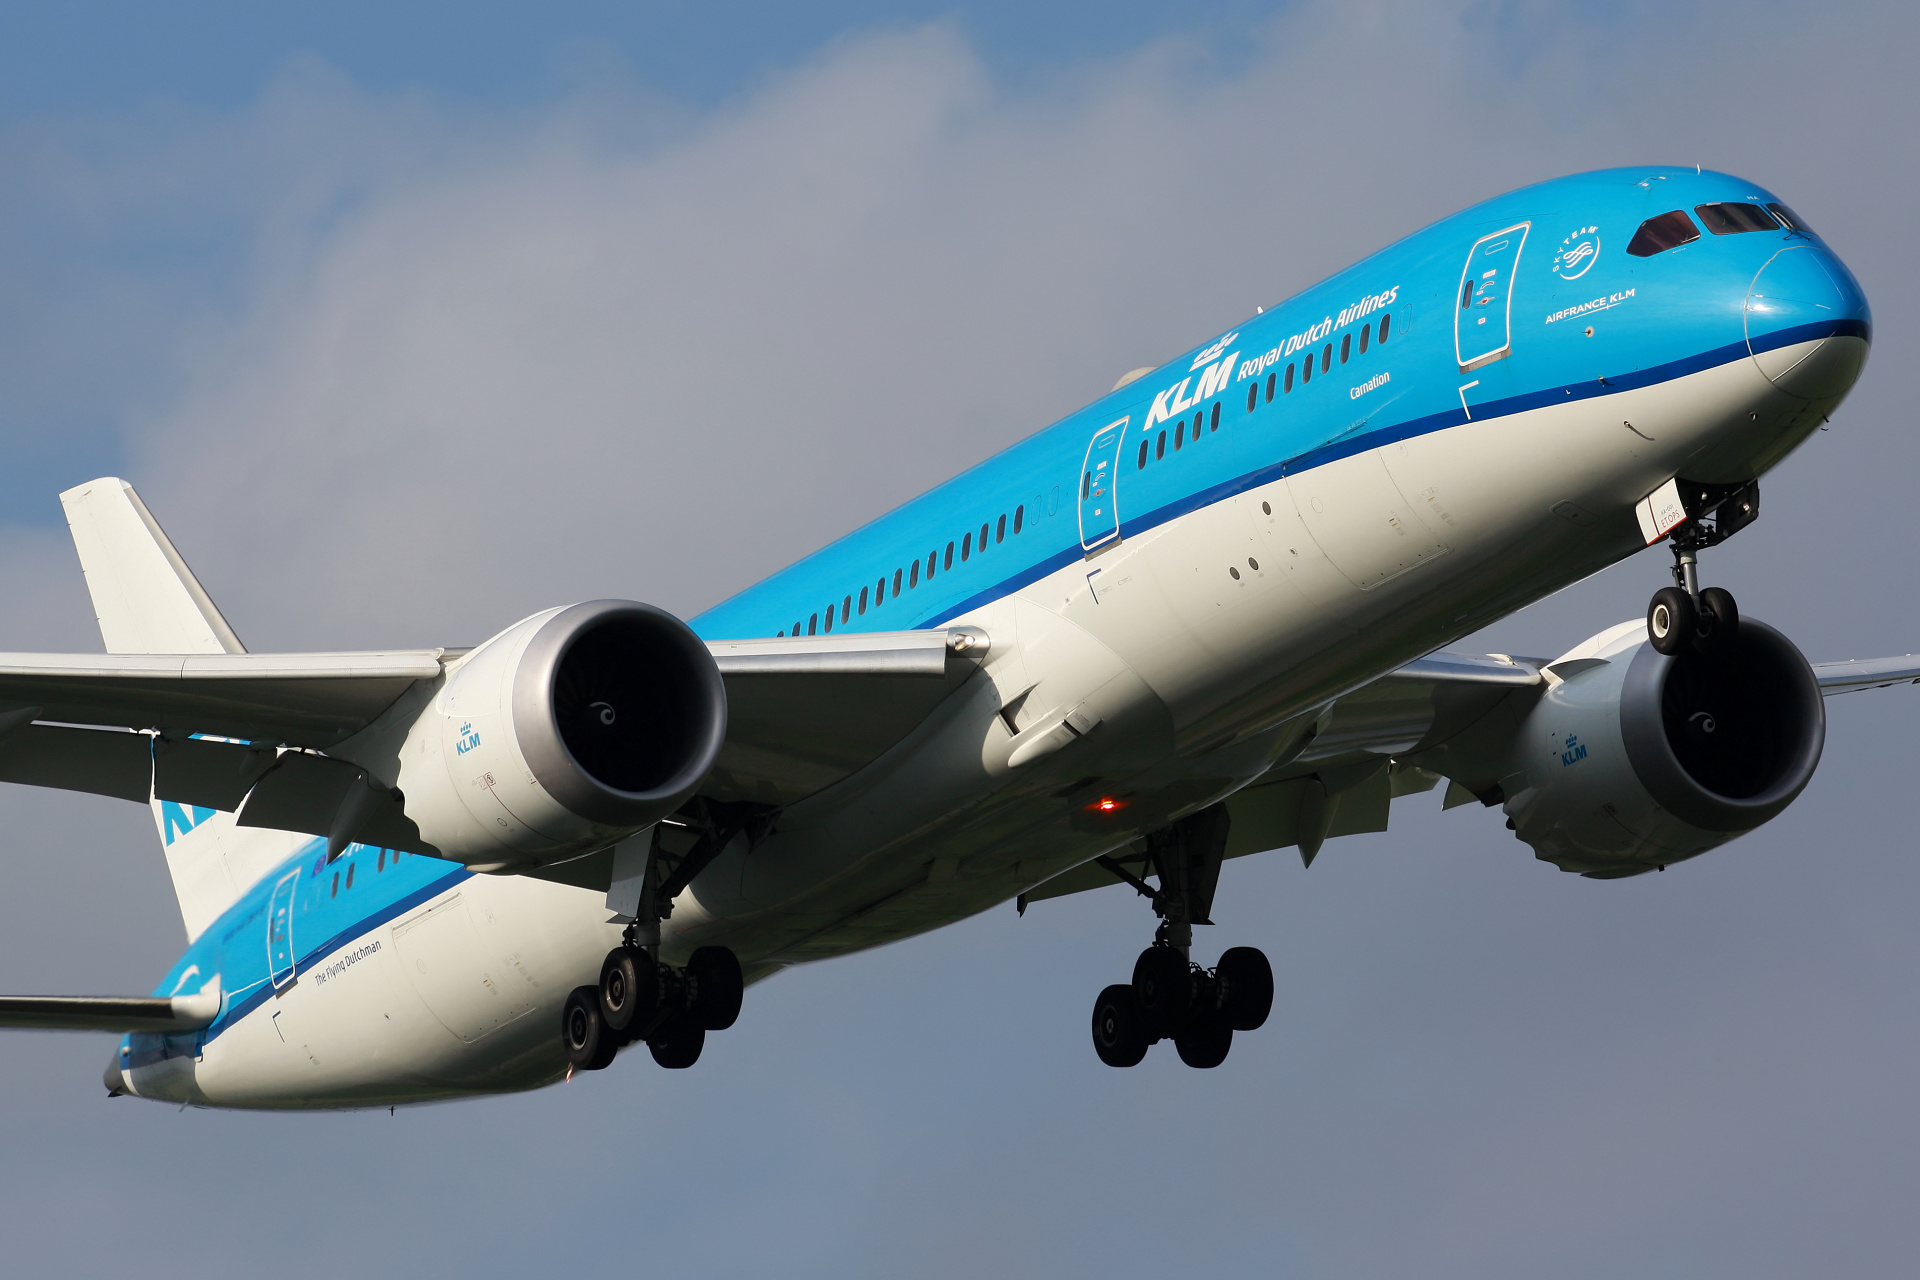 PH-BHA (Aircraft » Schiphol Spotting » Boeing 787-9 Dreamliner » KLM Royal Dutch Airlines)